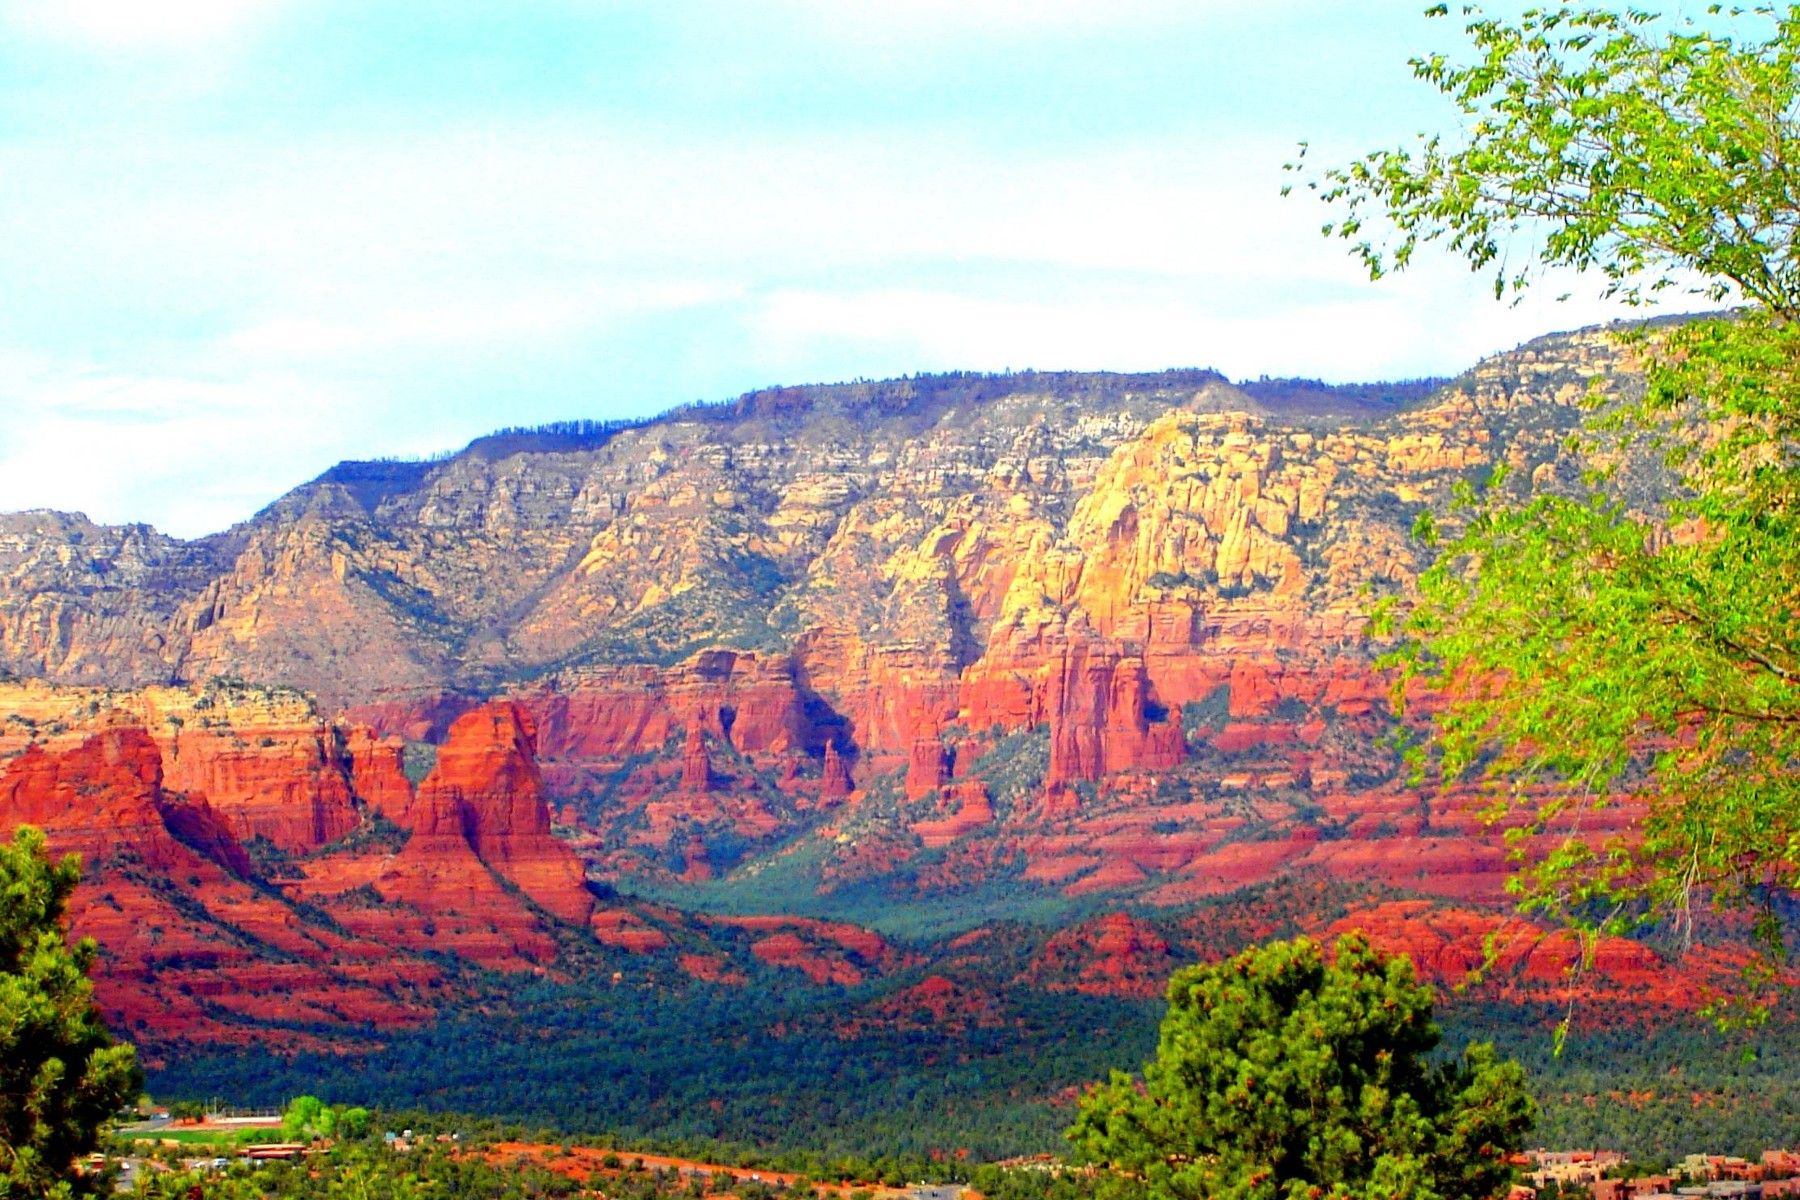 Arizona Desert Beauty | (Arizona) American Indians | Pinterest ...